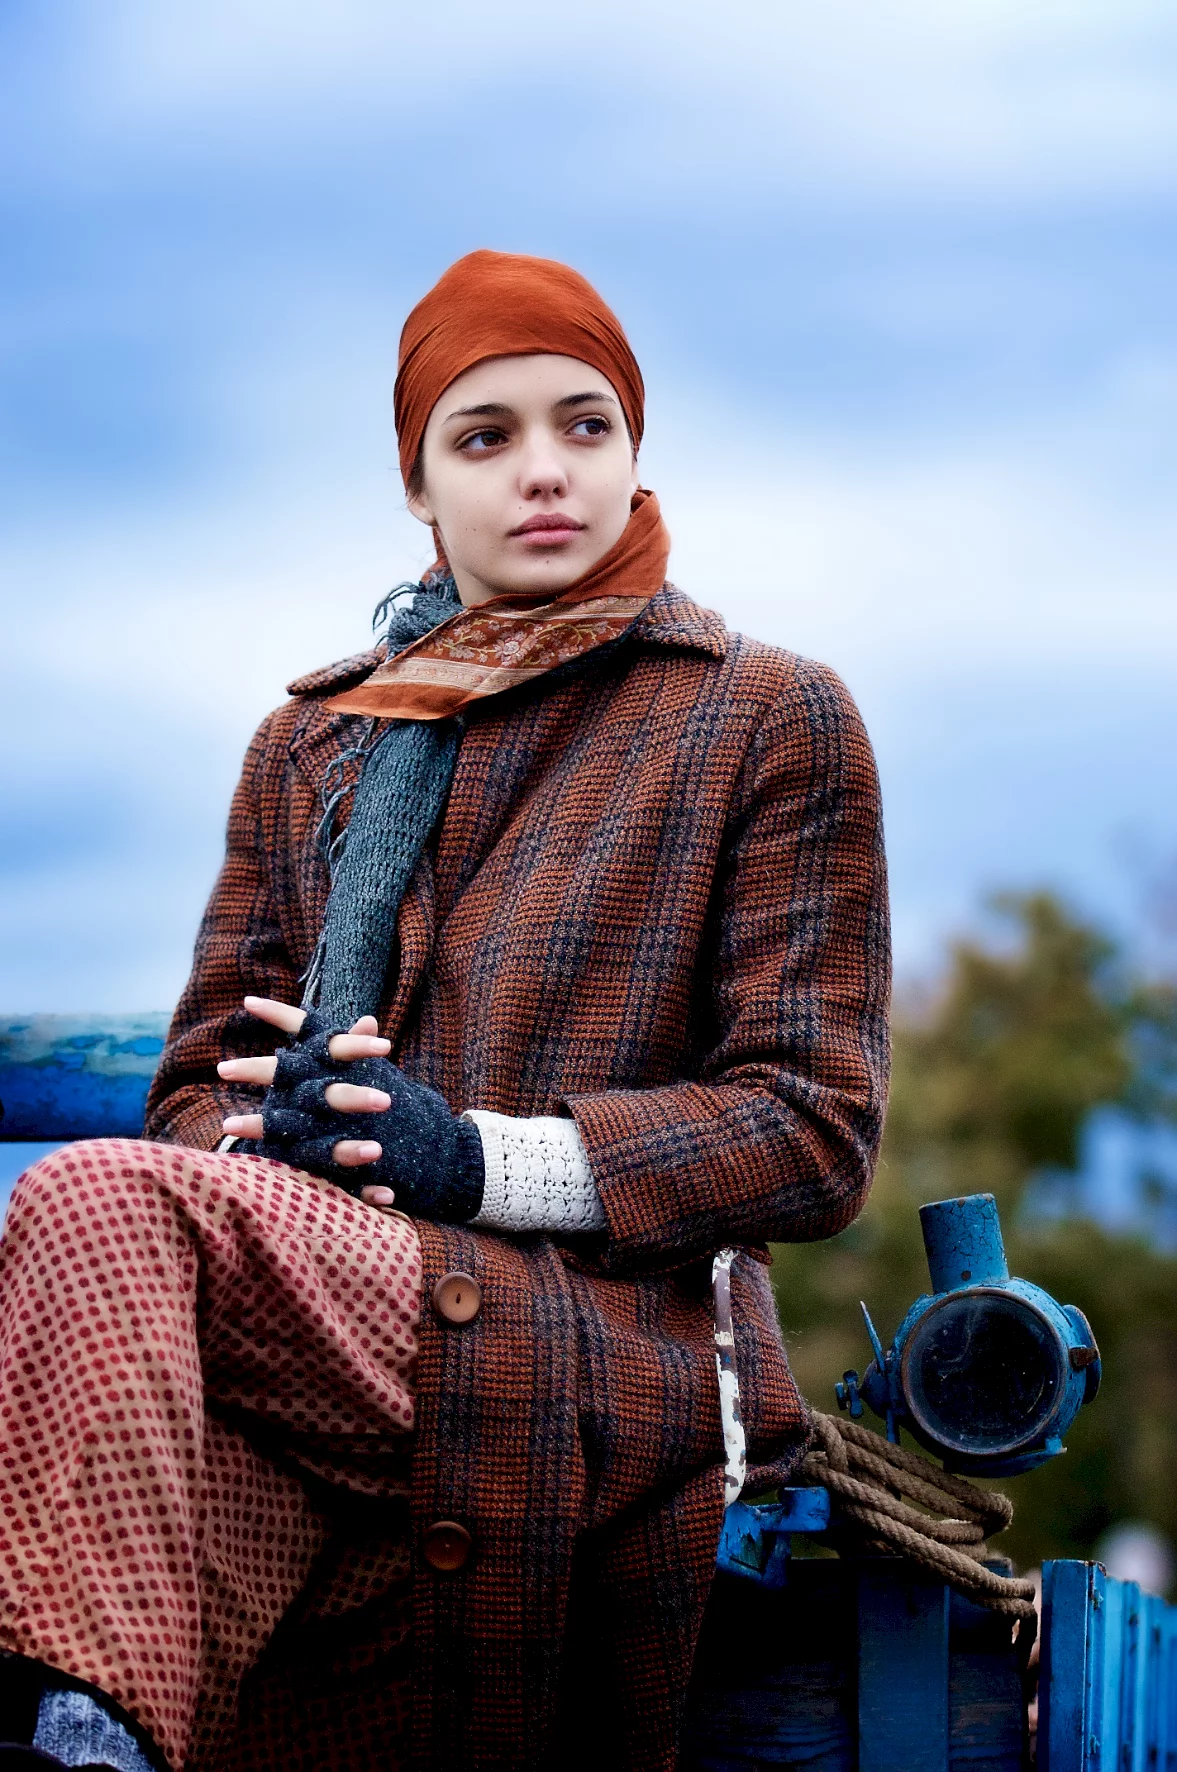 Photo du film : Irina, la mallette rouge